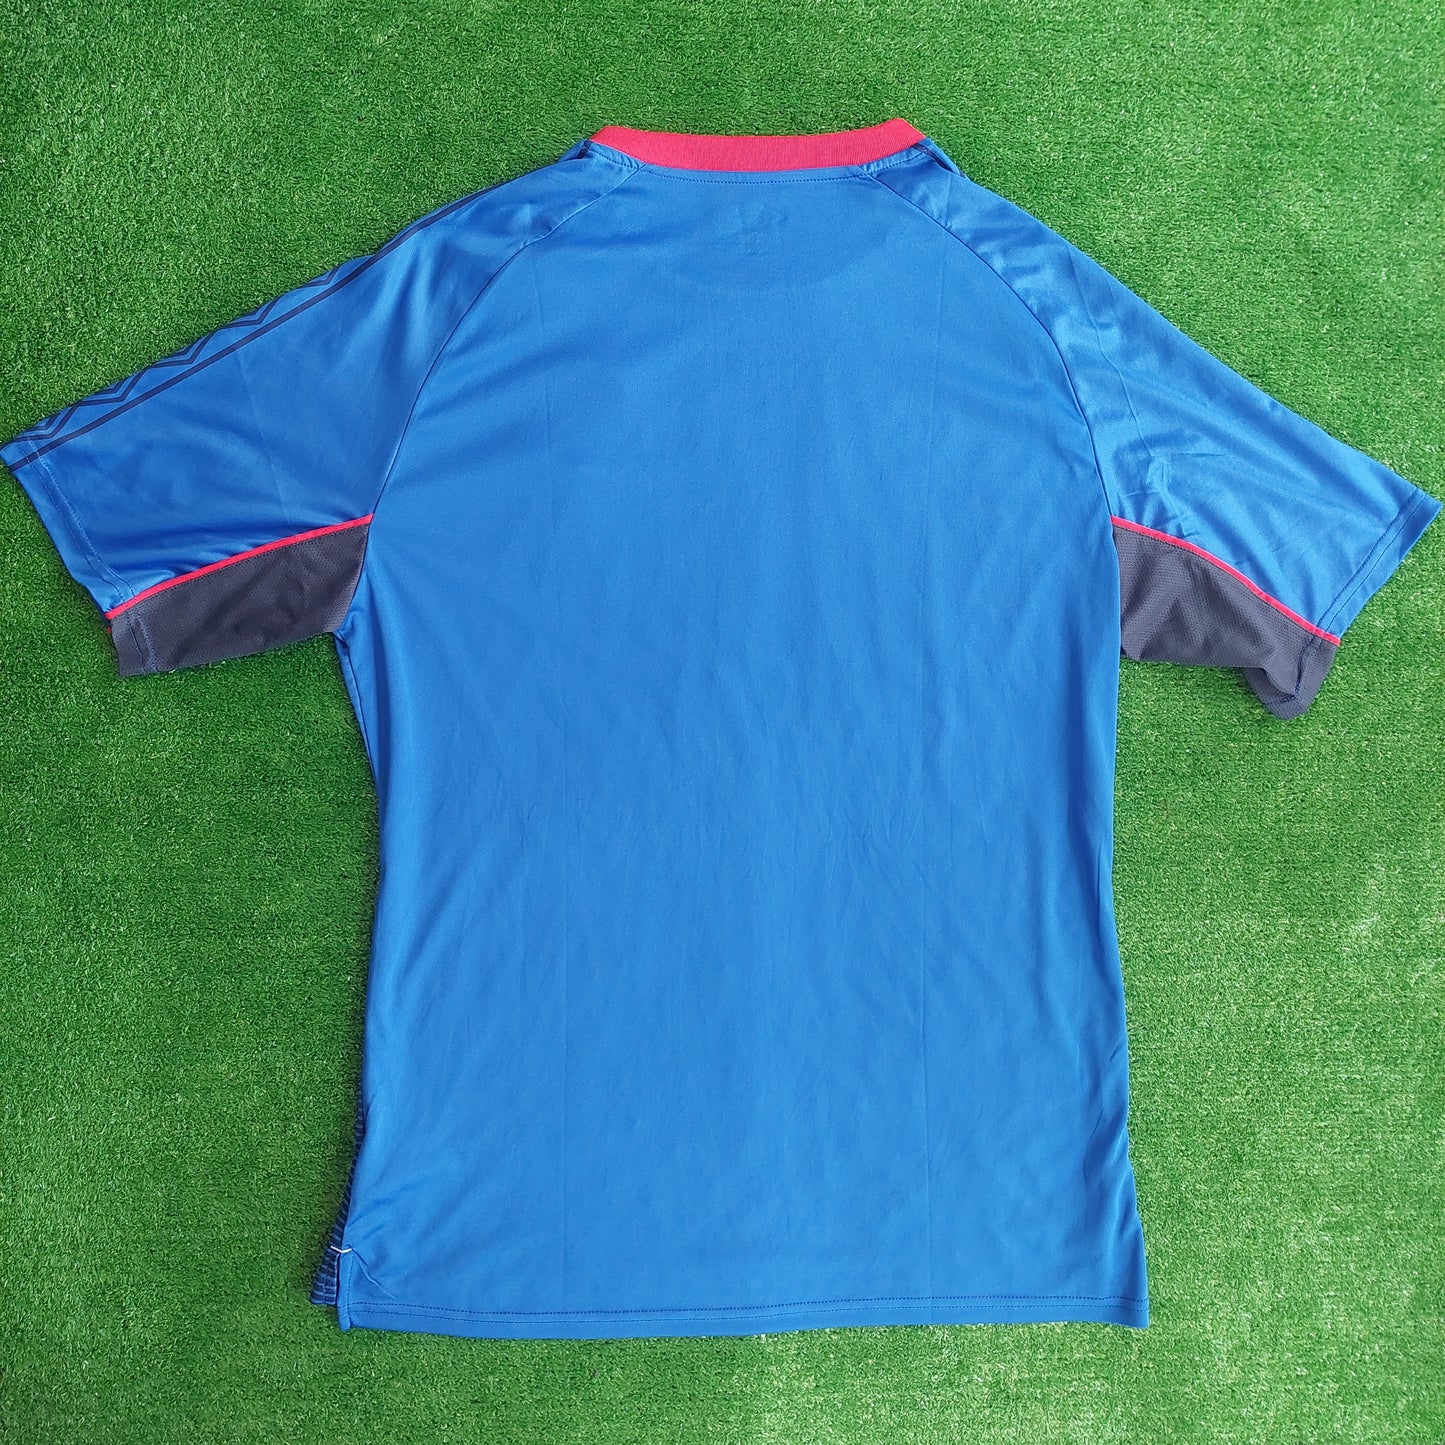 Carlisle United 2018/19 Home Shirt (Excellent) - Size XL